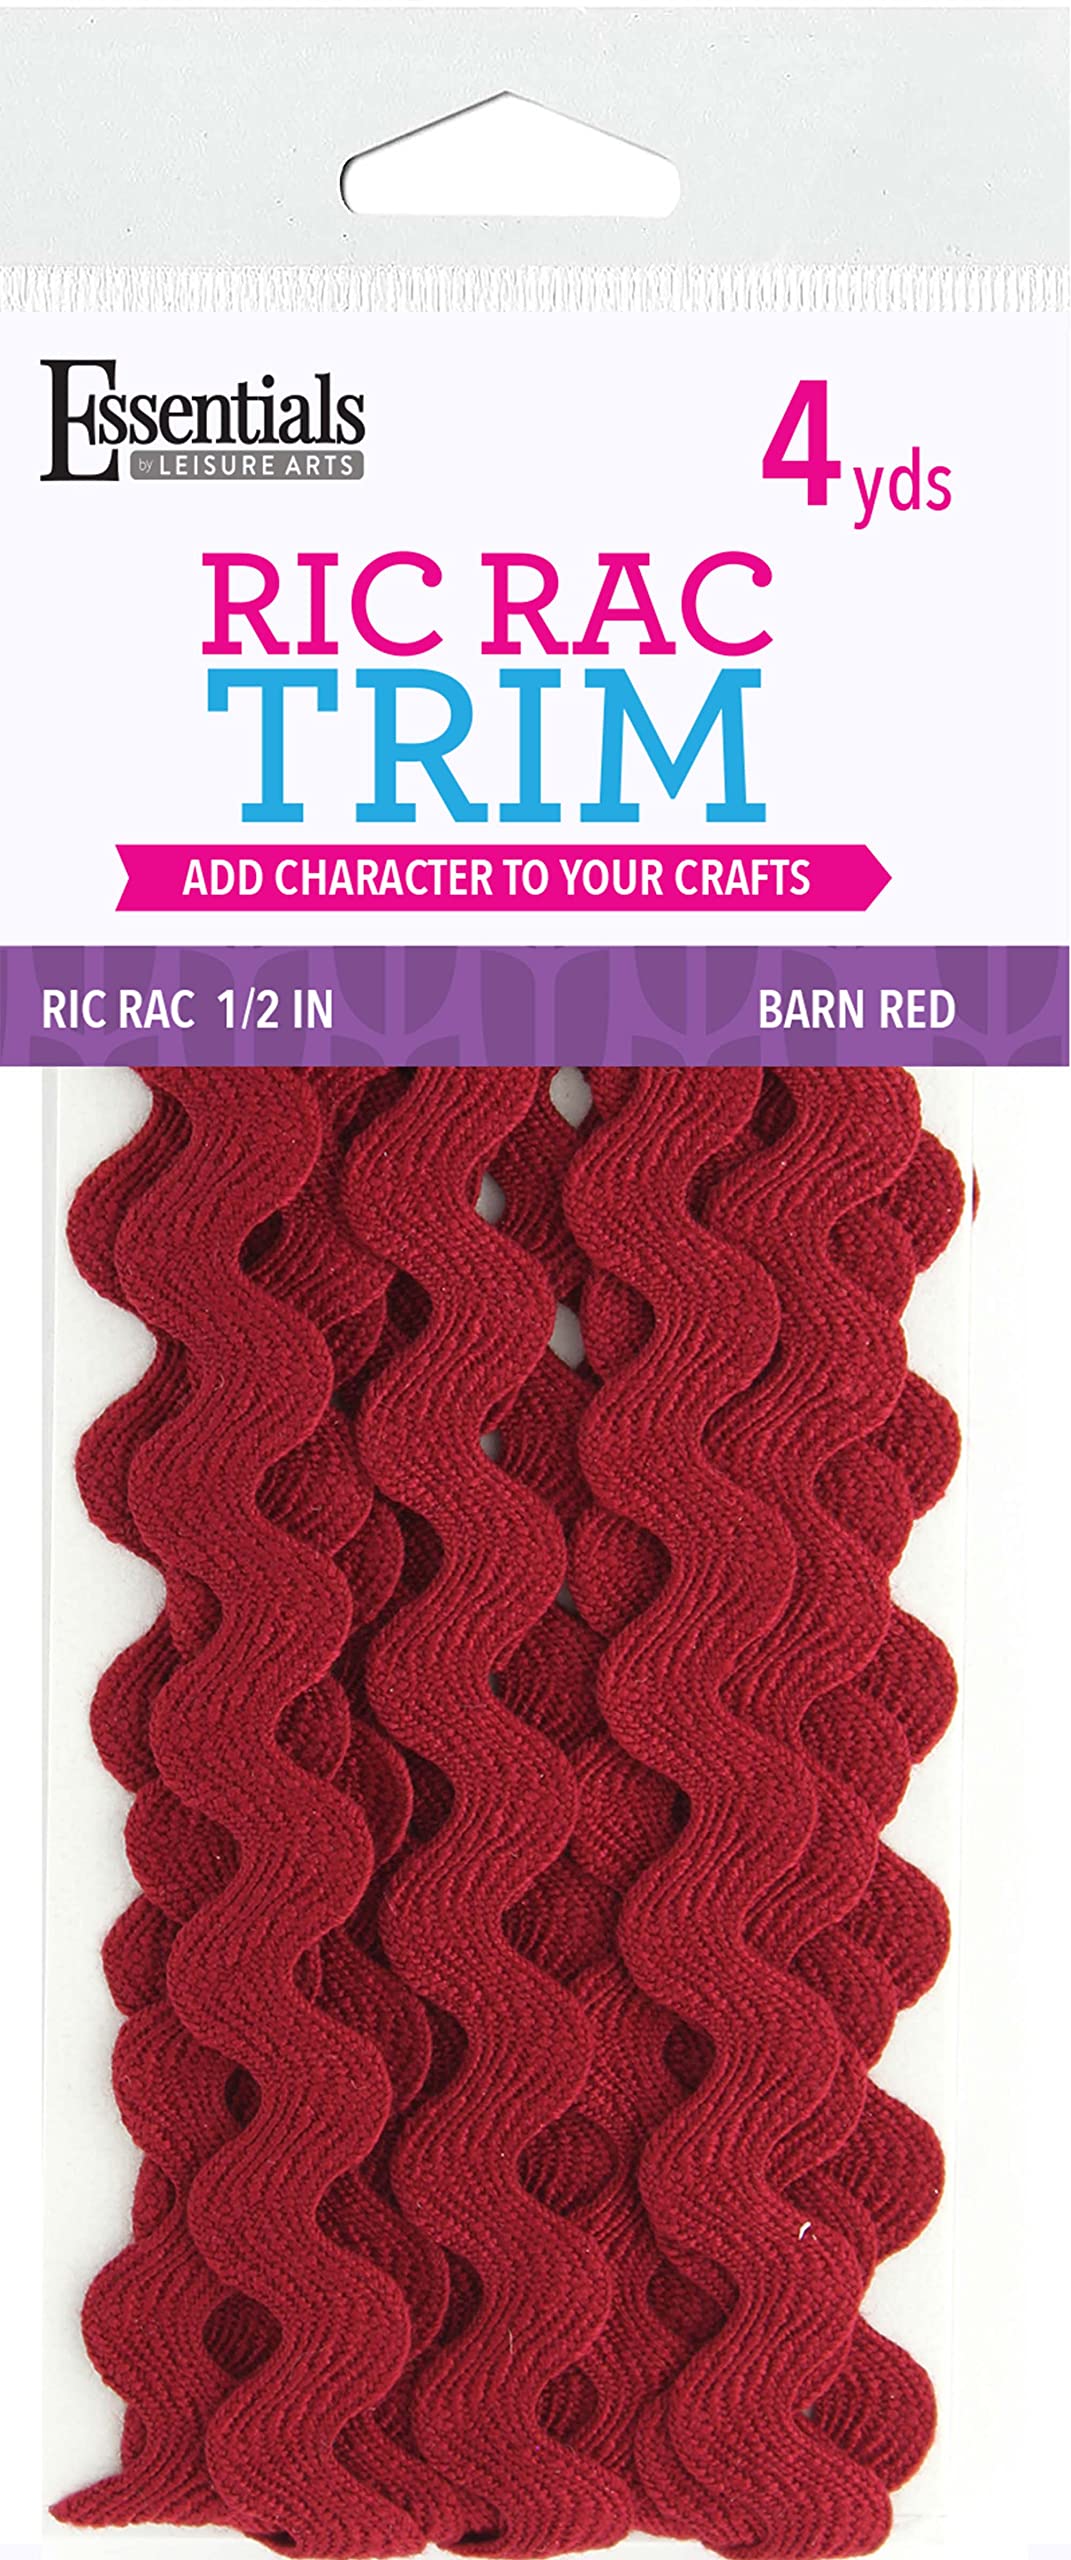 Essentials By Leisure Arts RIC Rac 1/2 4 Yards Black - Rick Rack Trim for  Sewing - Wavy RIC rac Trim for Sewing and Crafts - RIC rac Ribbon - Rick  Rack Trim Black